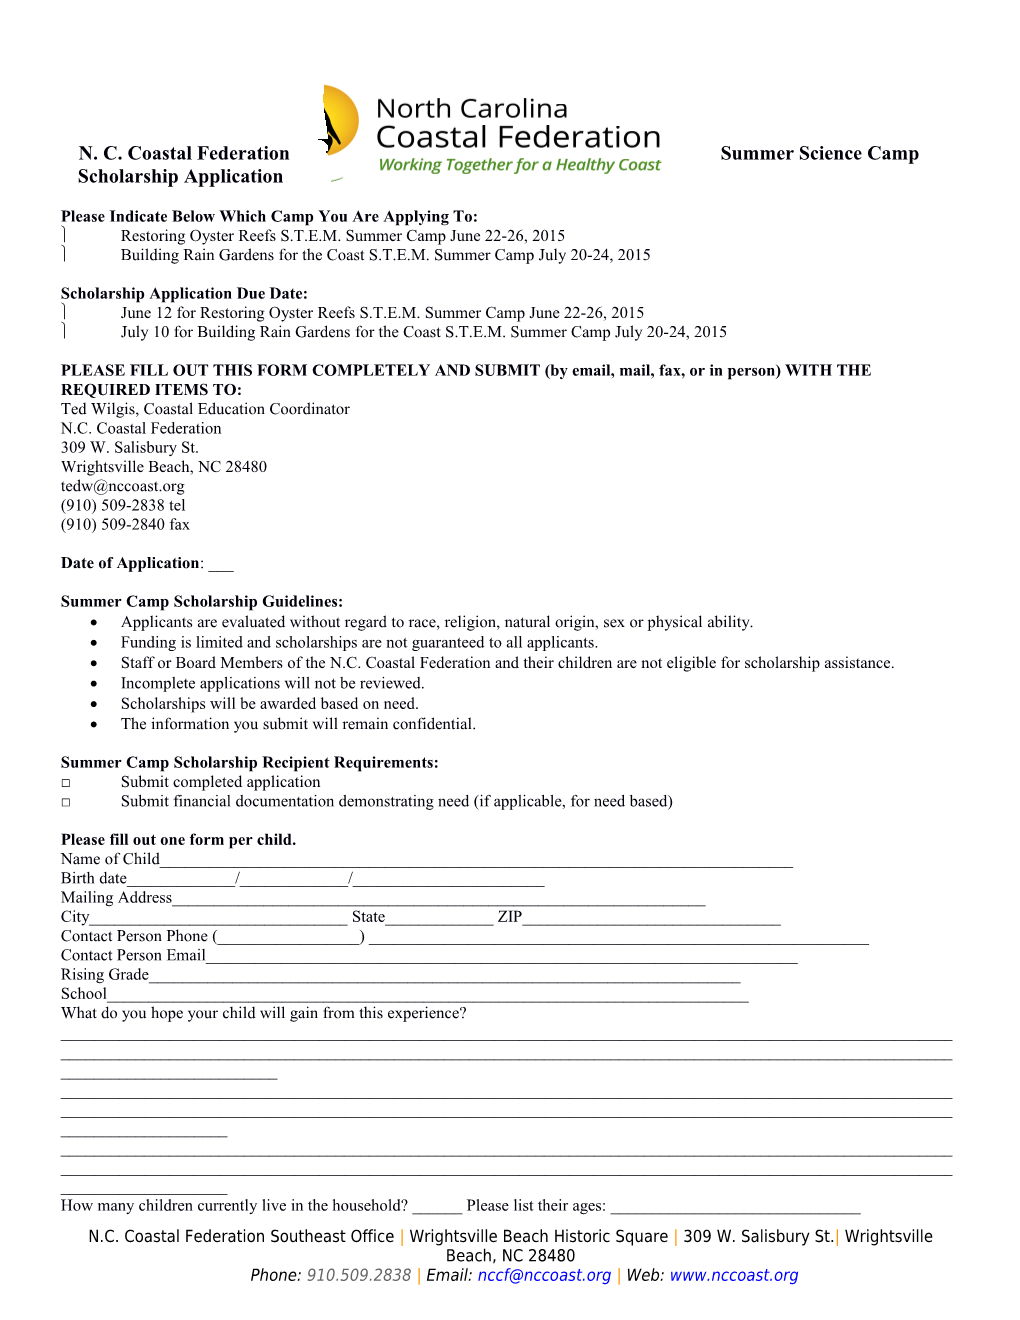 N. C. Coastal Federation Summer Science Camp Scholarship Application